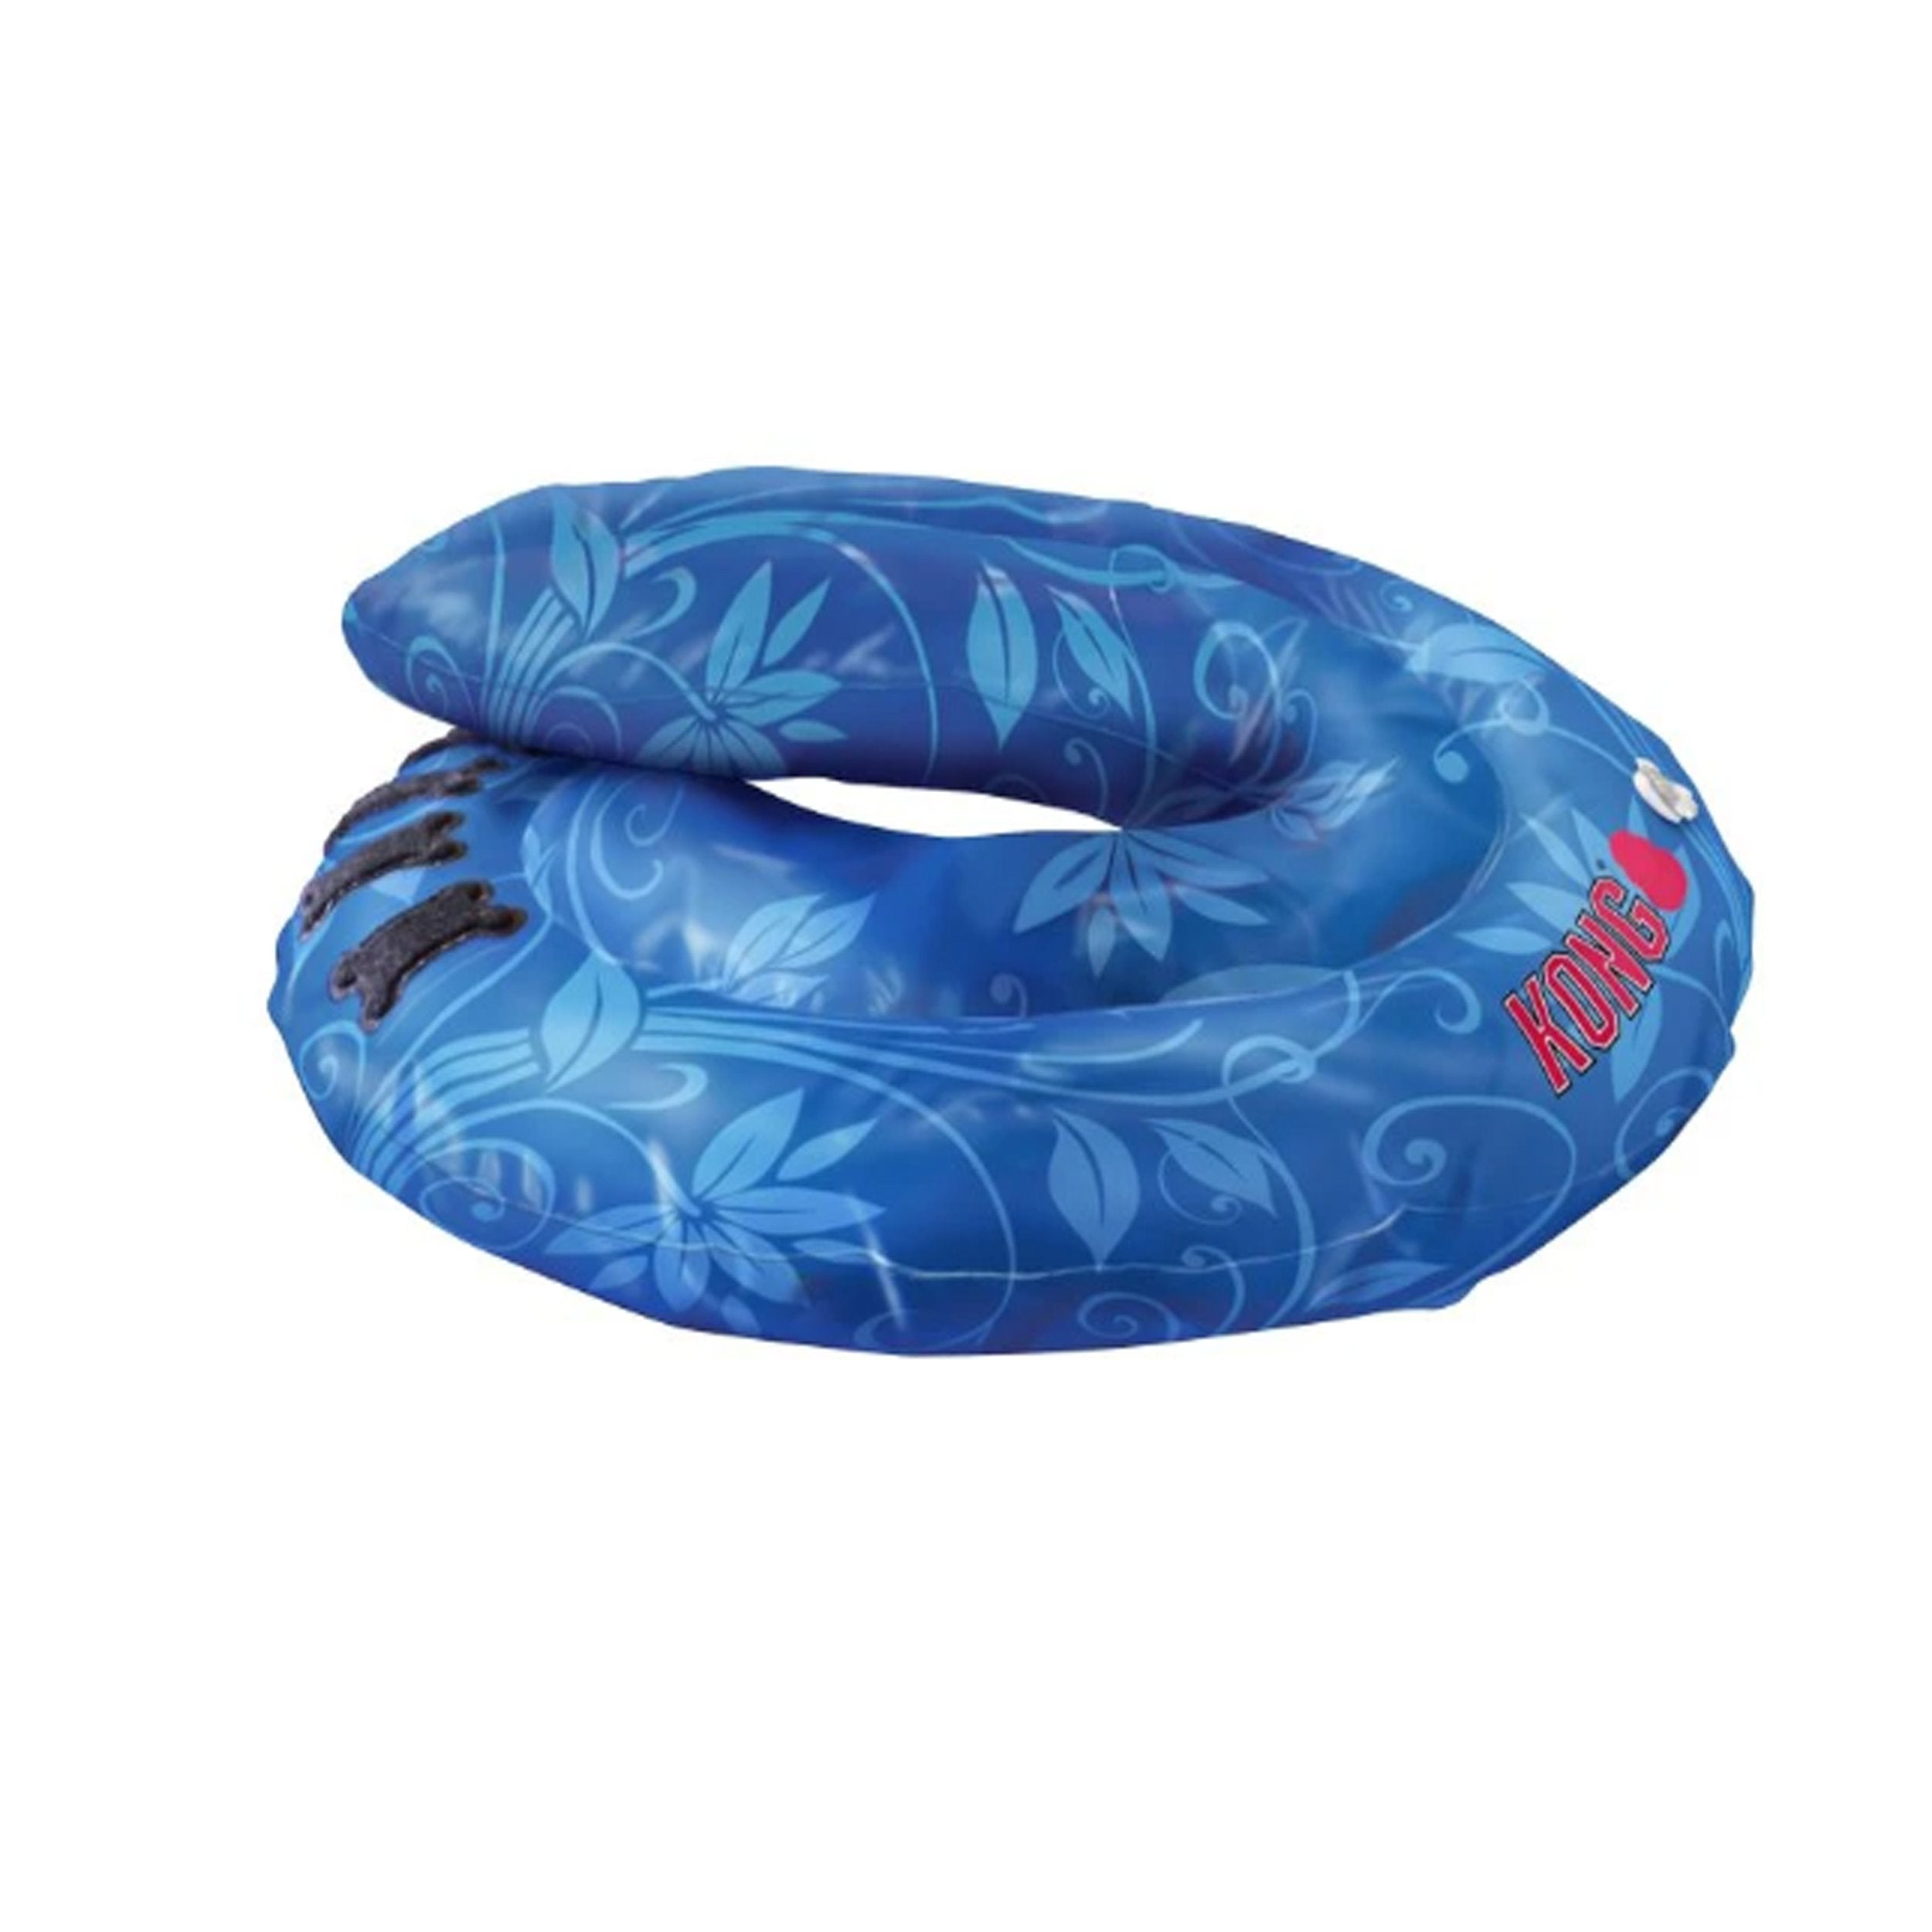 Kong Cushion Inflatable E-Collar Premium Protective Gear